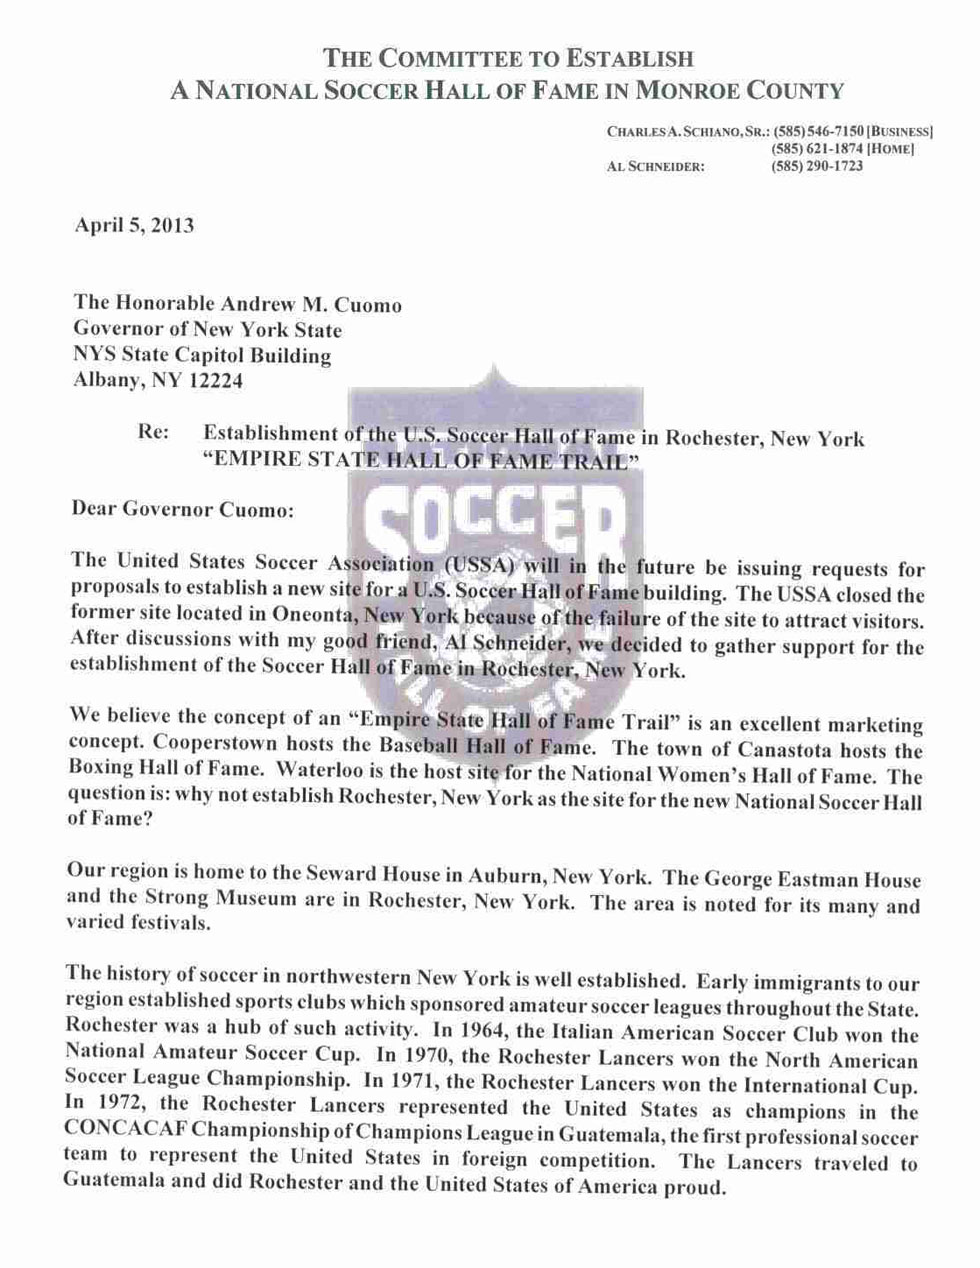 Al Schneider's letter to Governor Cuomo, RE: US Soccer Hall of Fame.